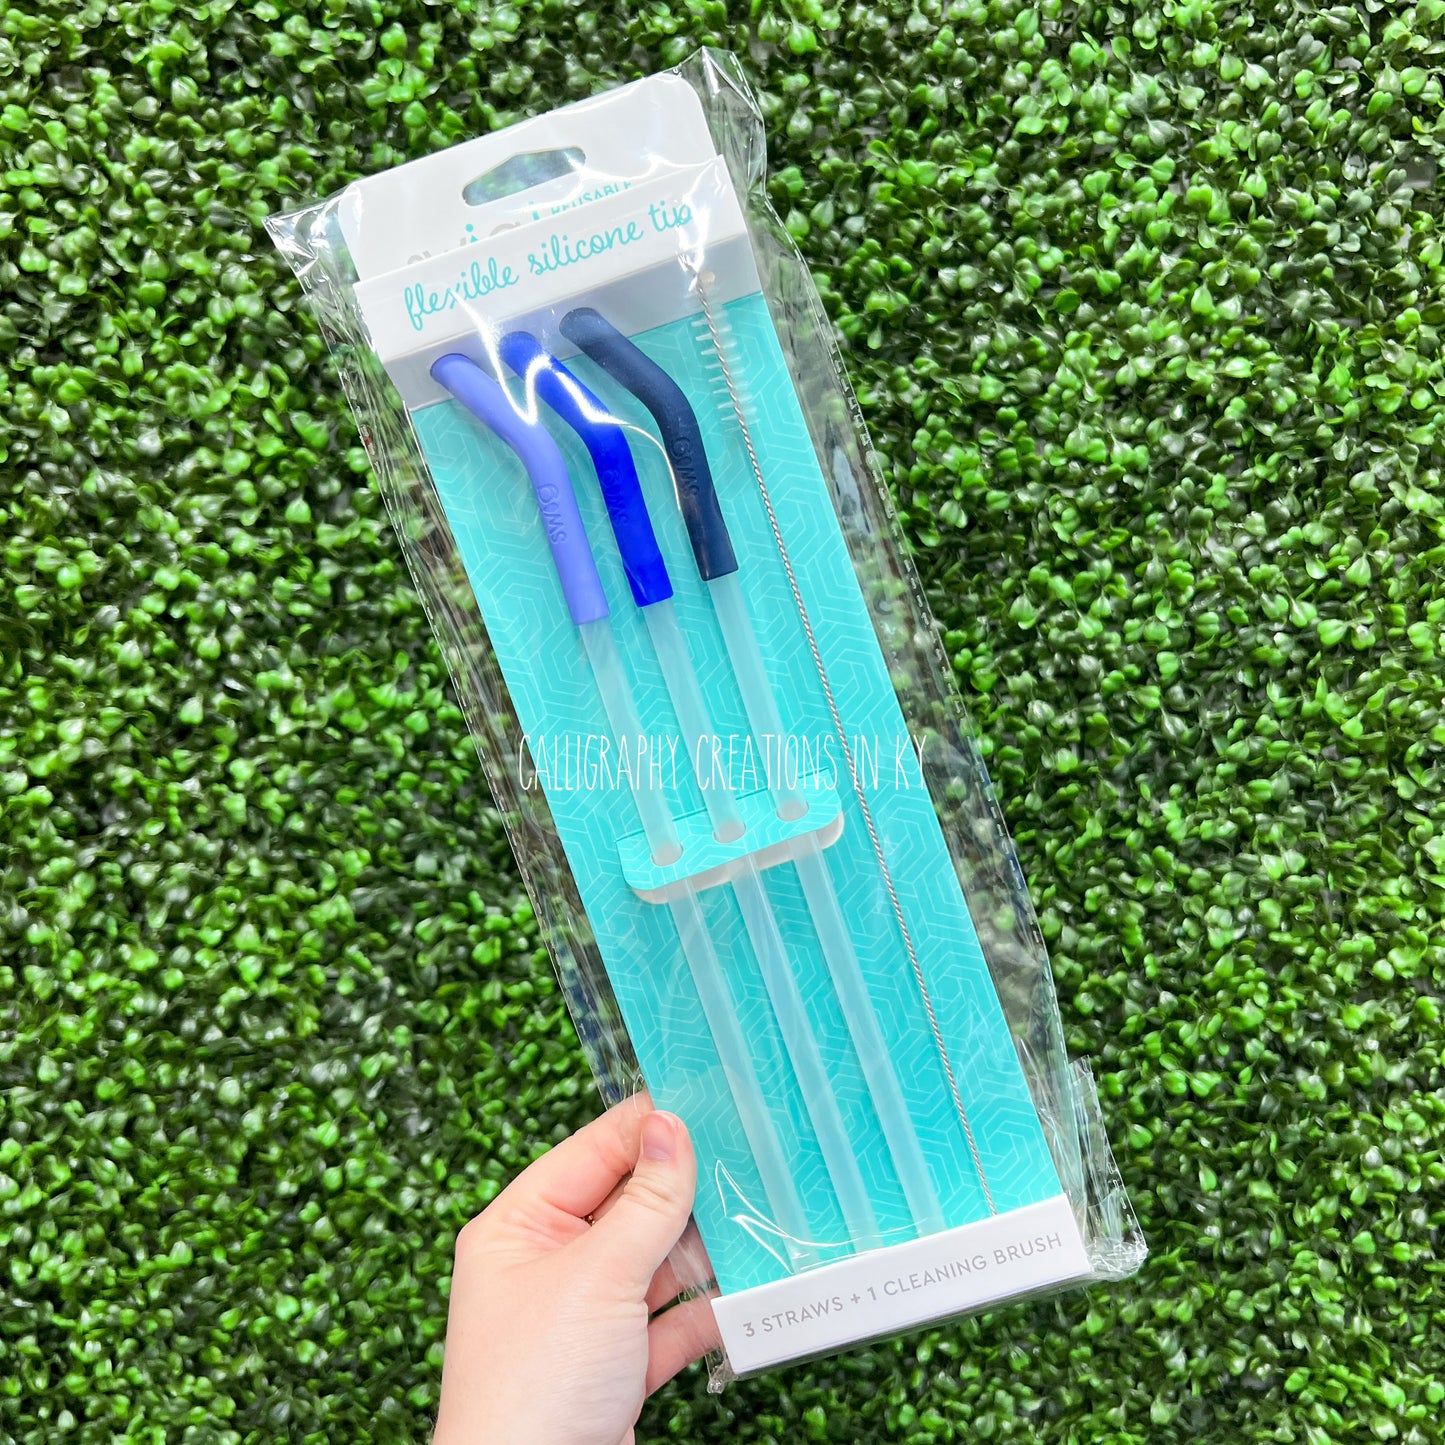 Hydrangea/Blue/Navy Swig Flexible Silicone Tip Reusable Straw Set